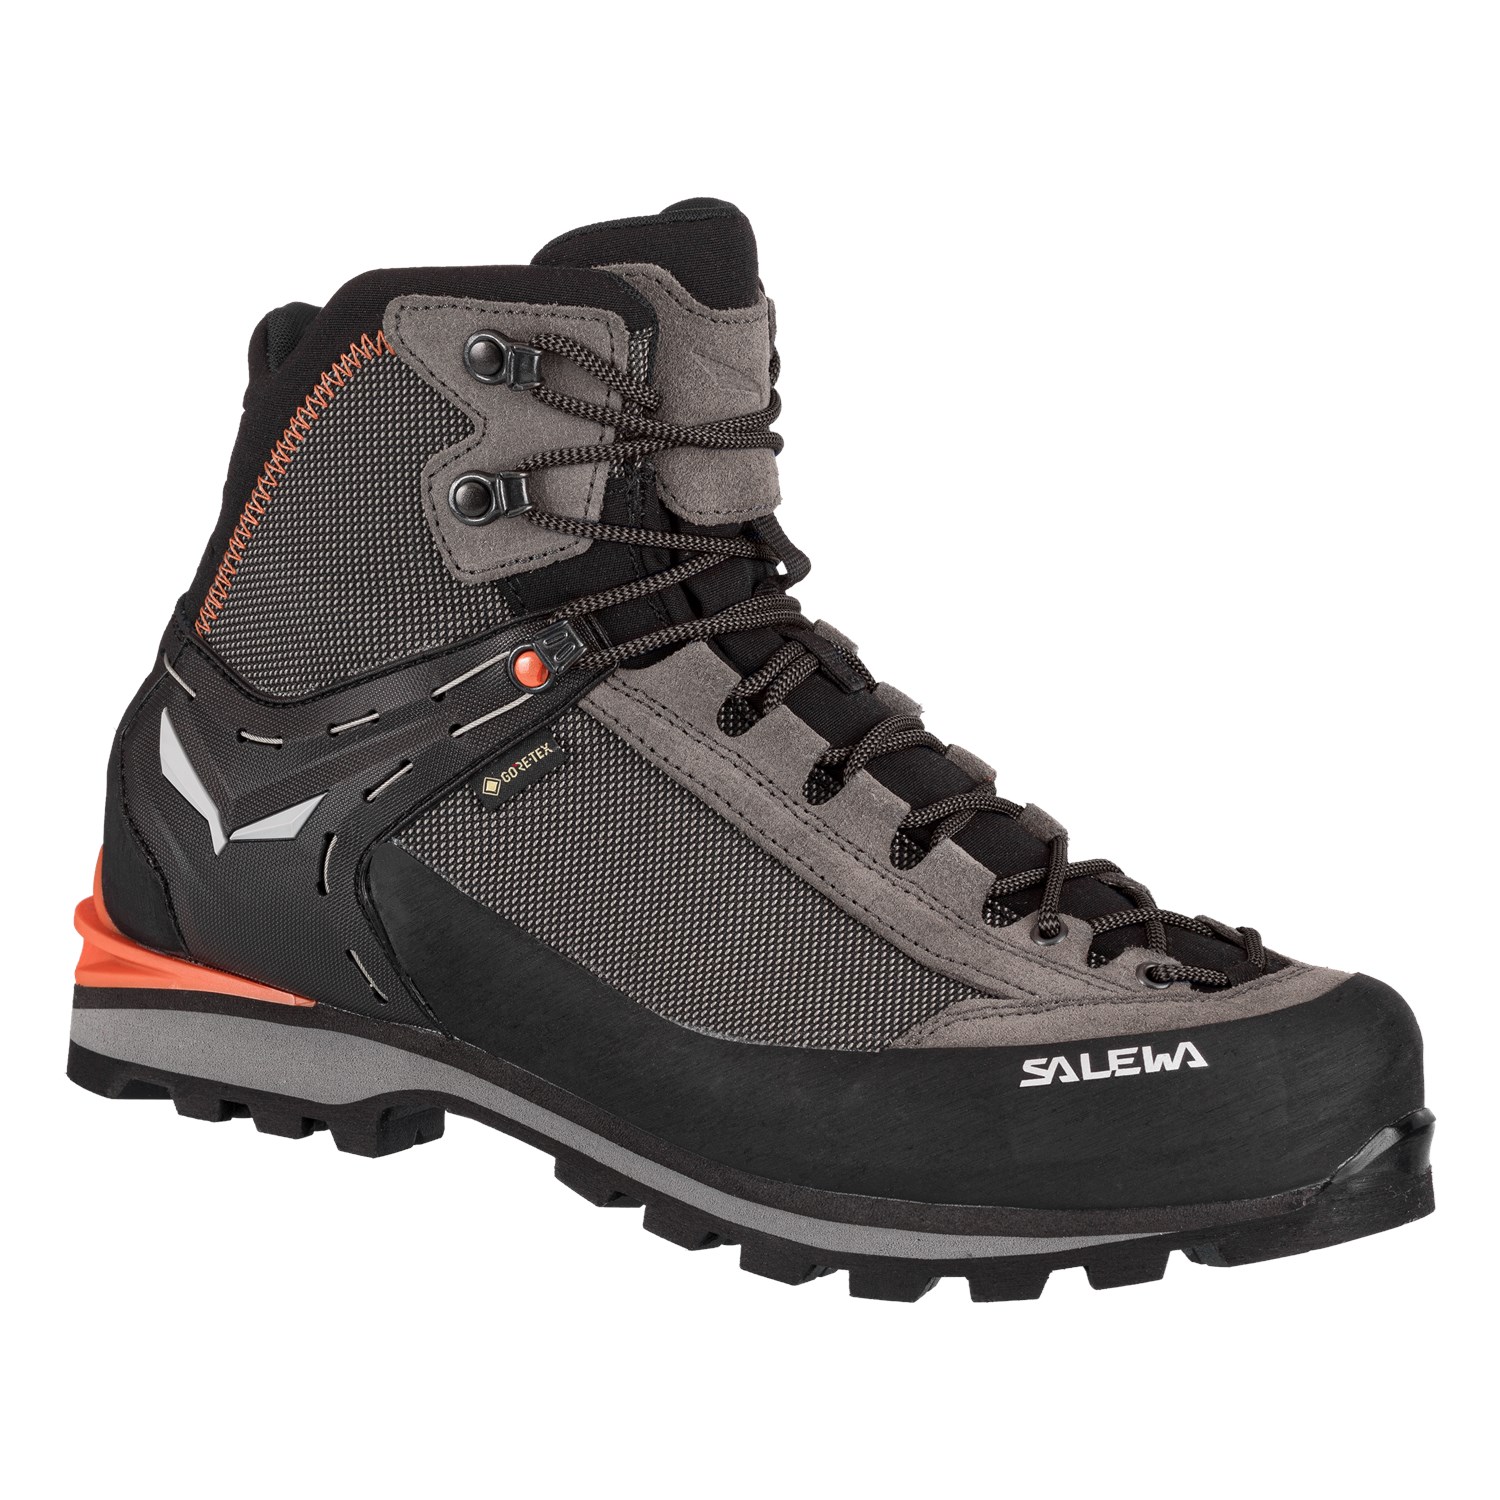 Salewa CROW GTX Mountaineering Boots UK 9.5 E 44 cm 28.5 Mens Goretex Crampon 